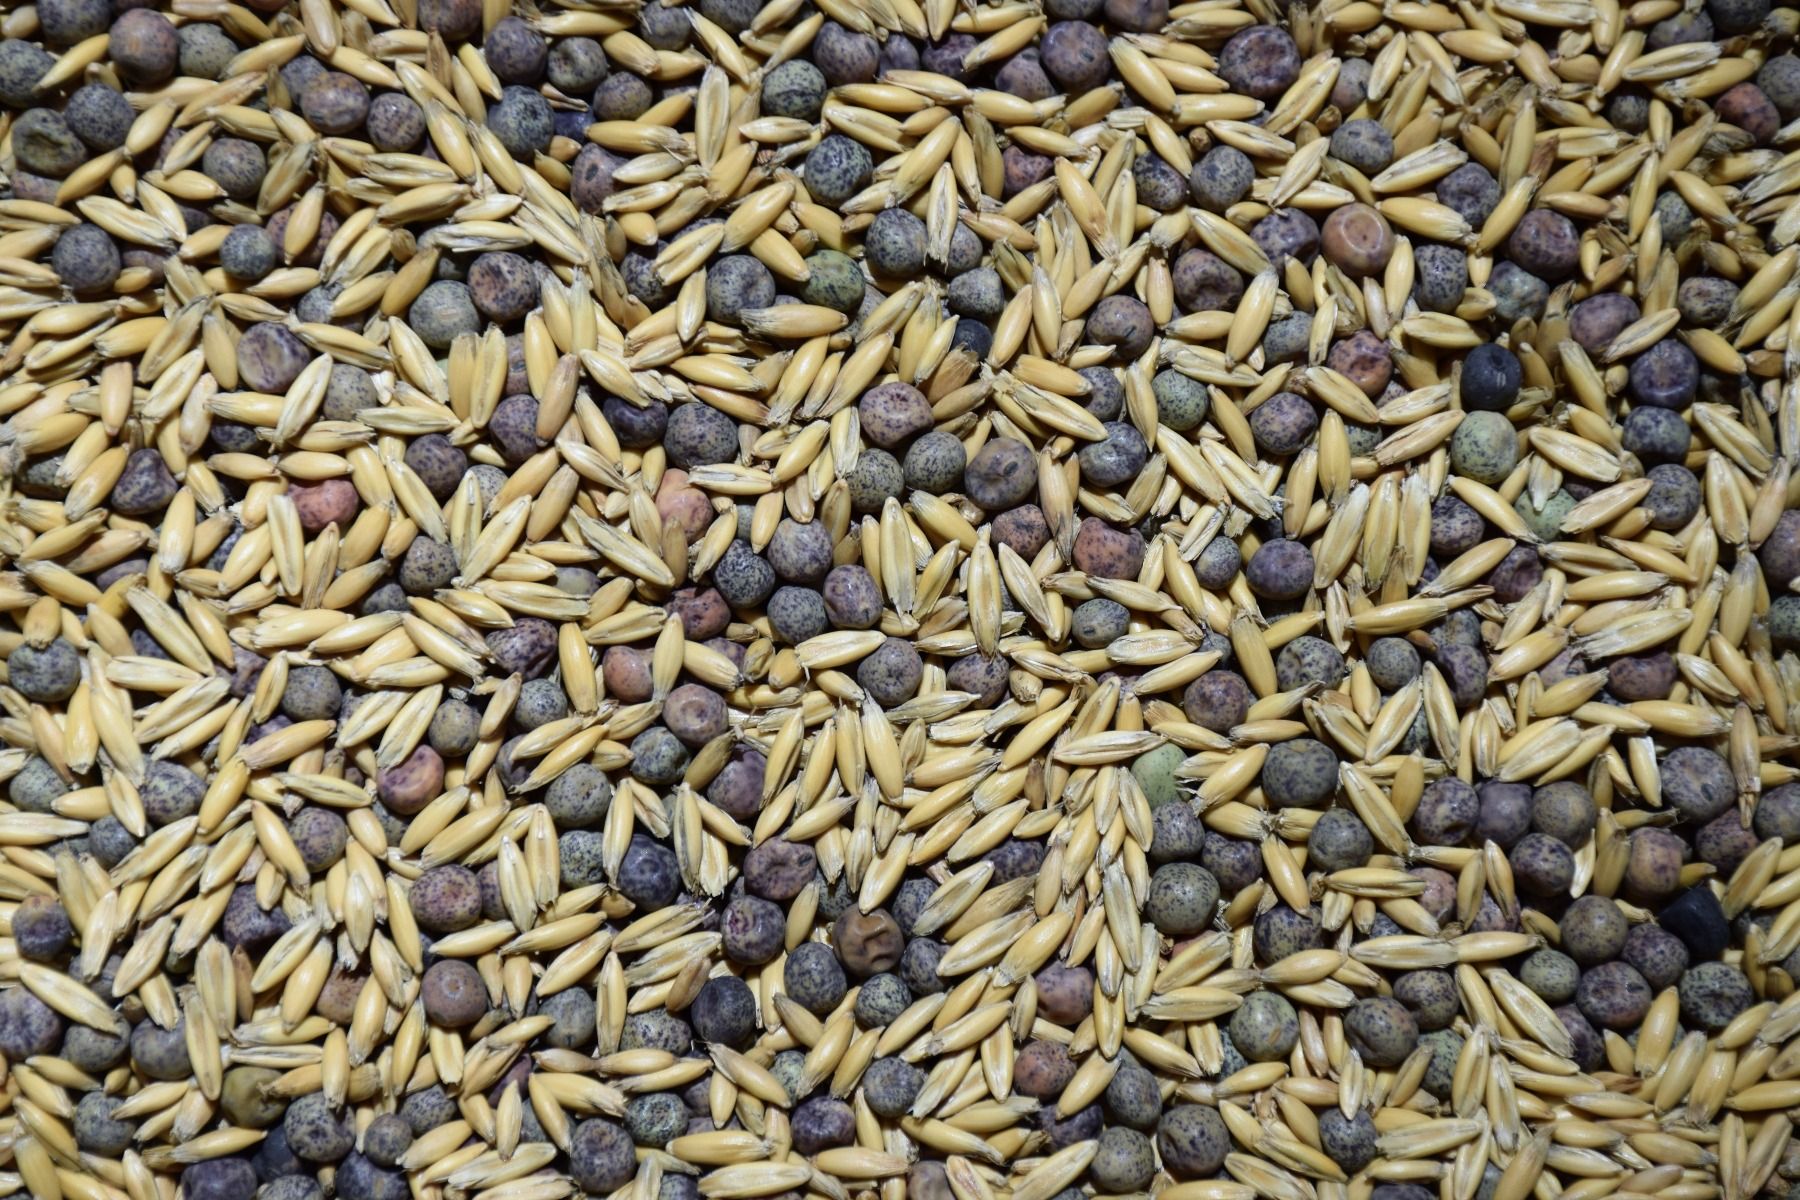 Forage Seed Market Analysis | Forage Seed Market Worth 18.47 Billion By 2025 | CAGR 7.20%